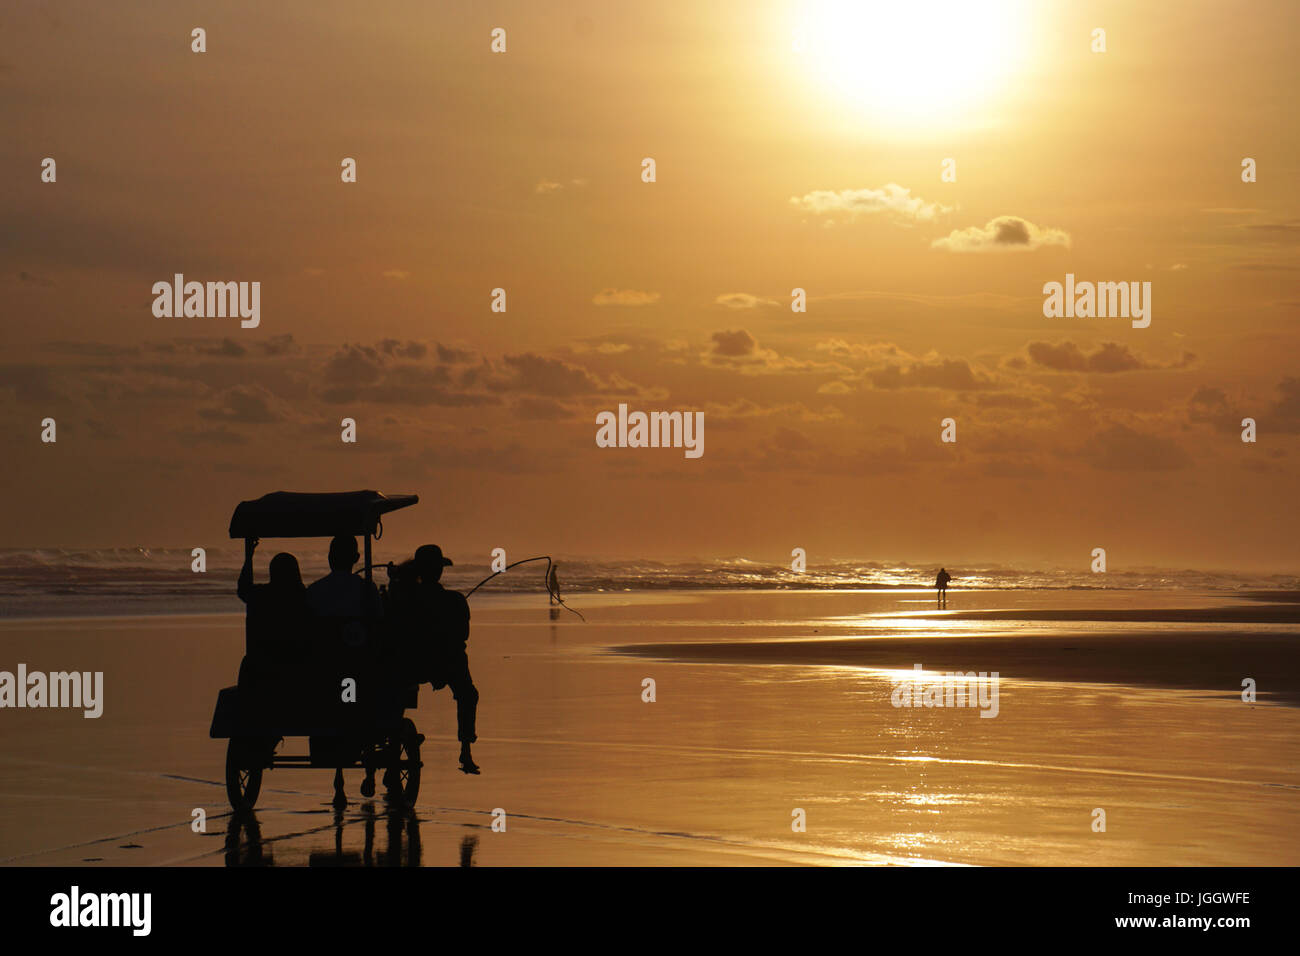 Some Tourist are riding 'Andong' in Parangtritis Beach, Bantul, Yogyakarta. Stock Photo